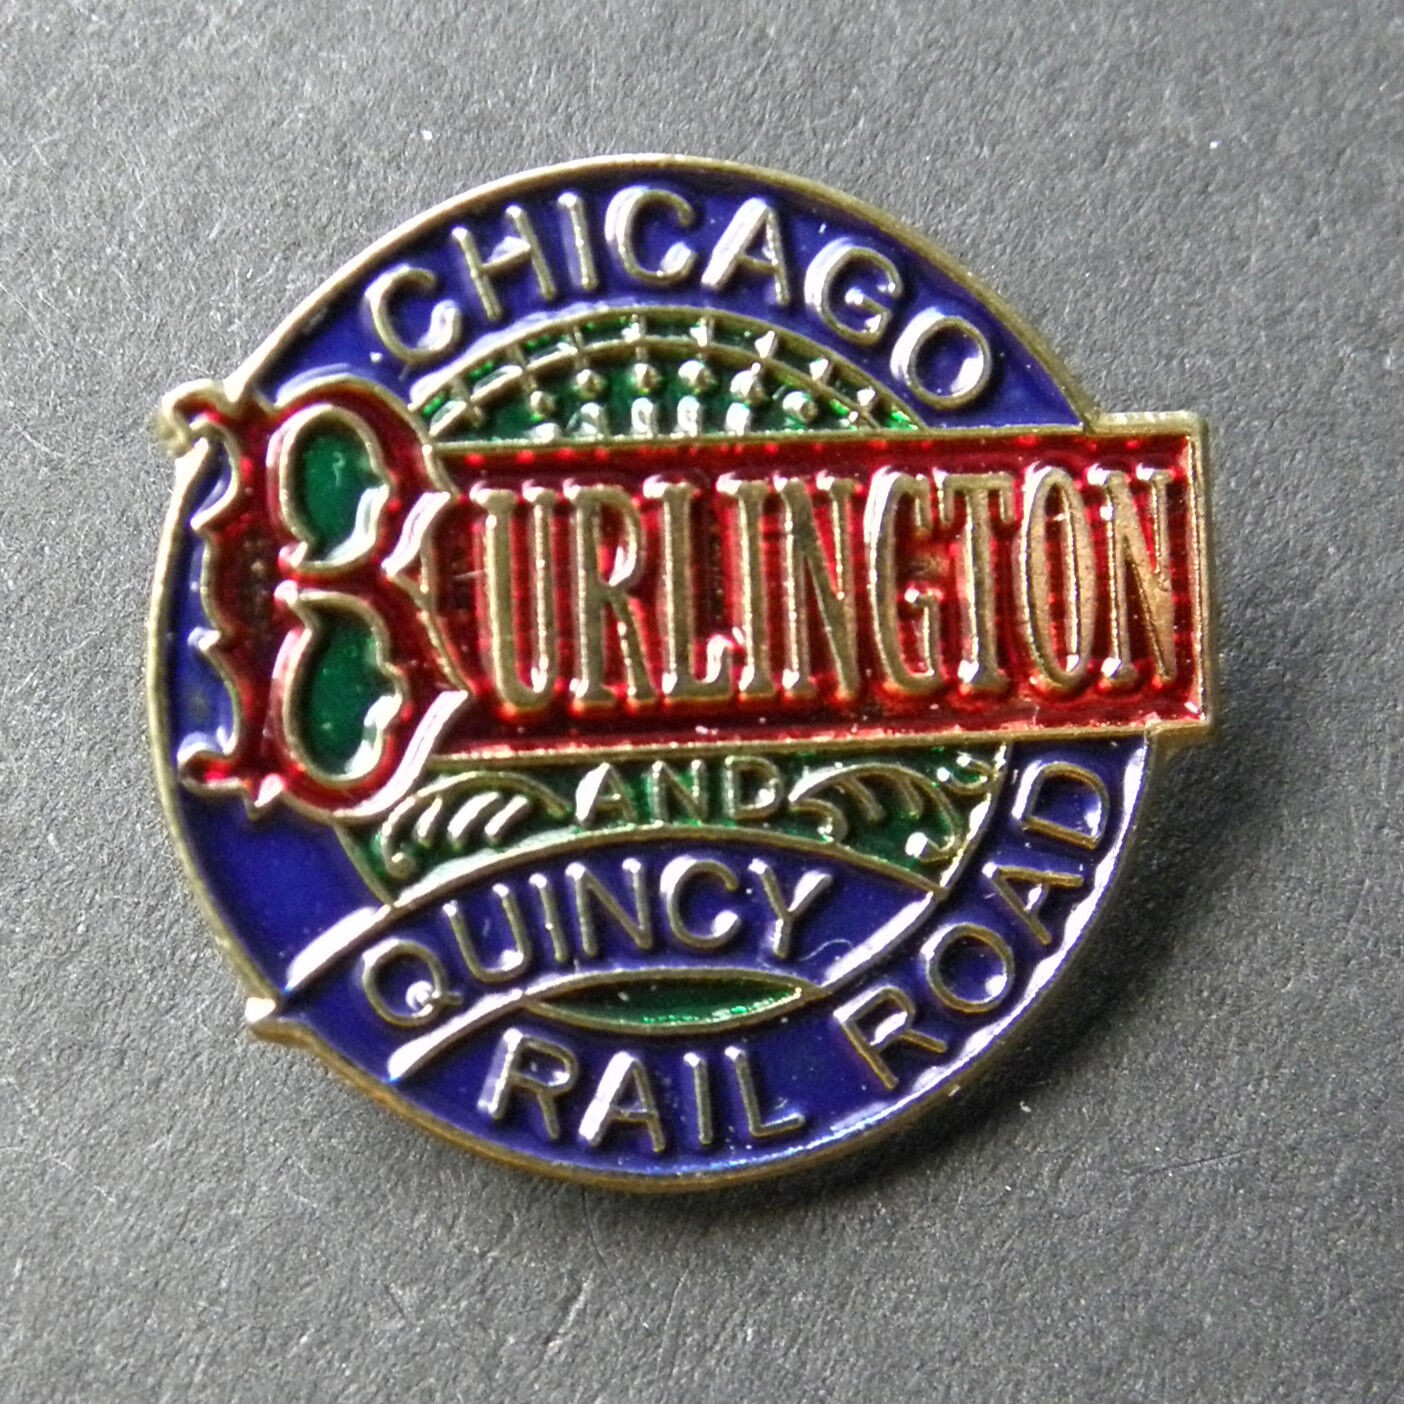 CBQ CHICAGO BURLINGTON QUINCY RAILWAY RAILROAD LAPEL PIN BADGE 1 INCH